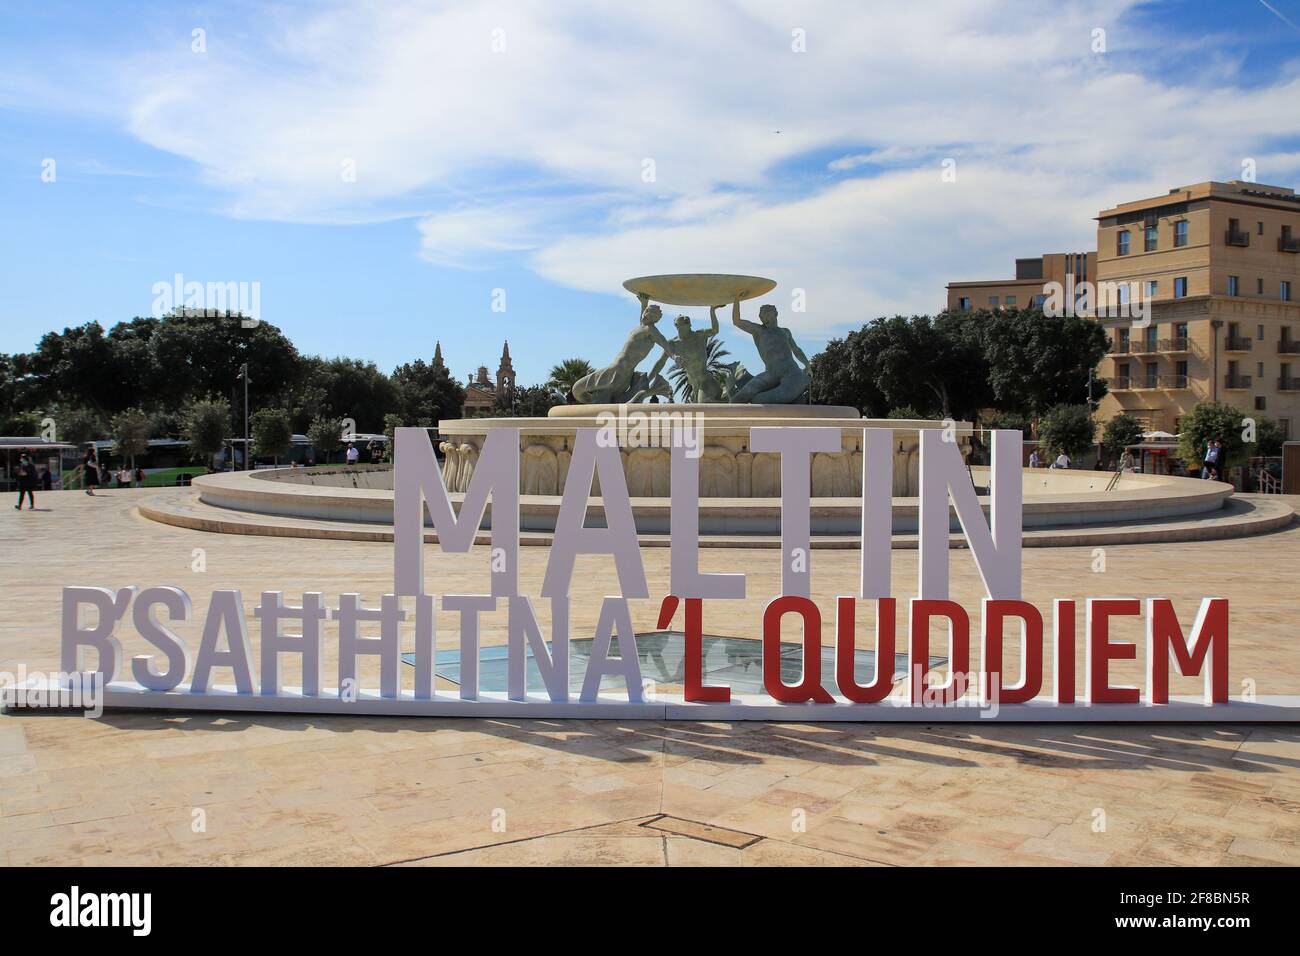 Valetta, Malta - October 22, 2020: 'Maltin b’Sahhitna ’l Quddiem' written in maltese language means 'Maltese with a Strong Forward' Stock Photo